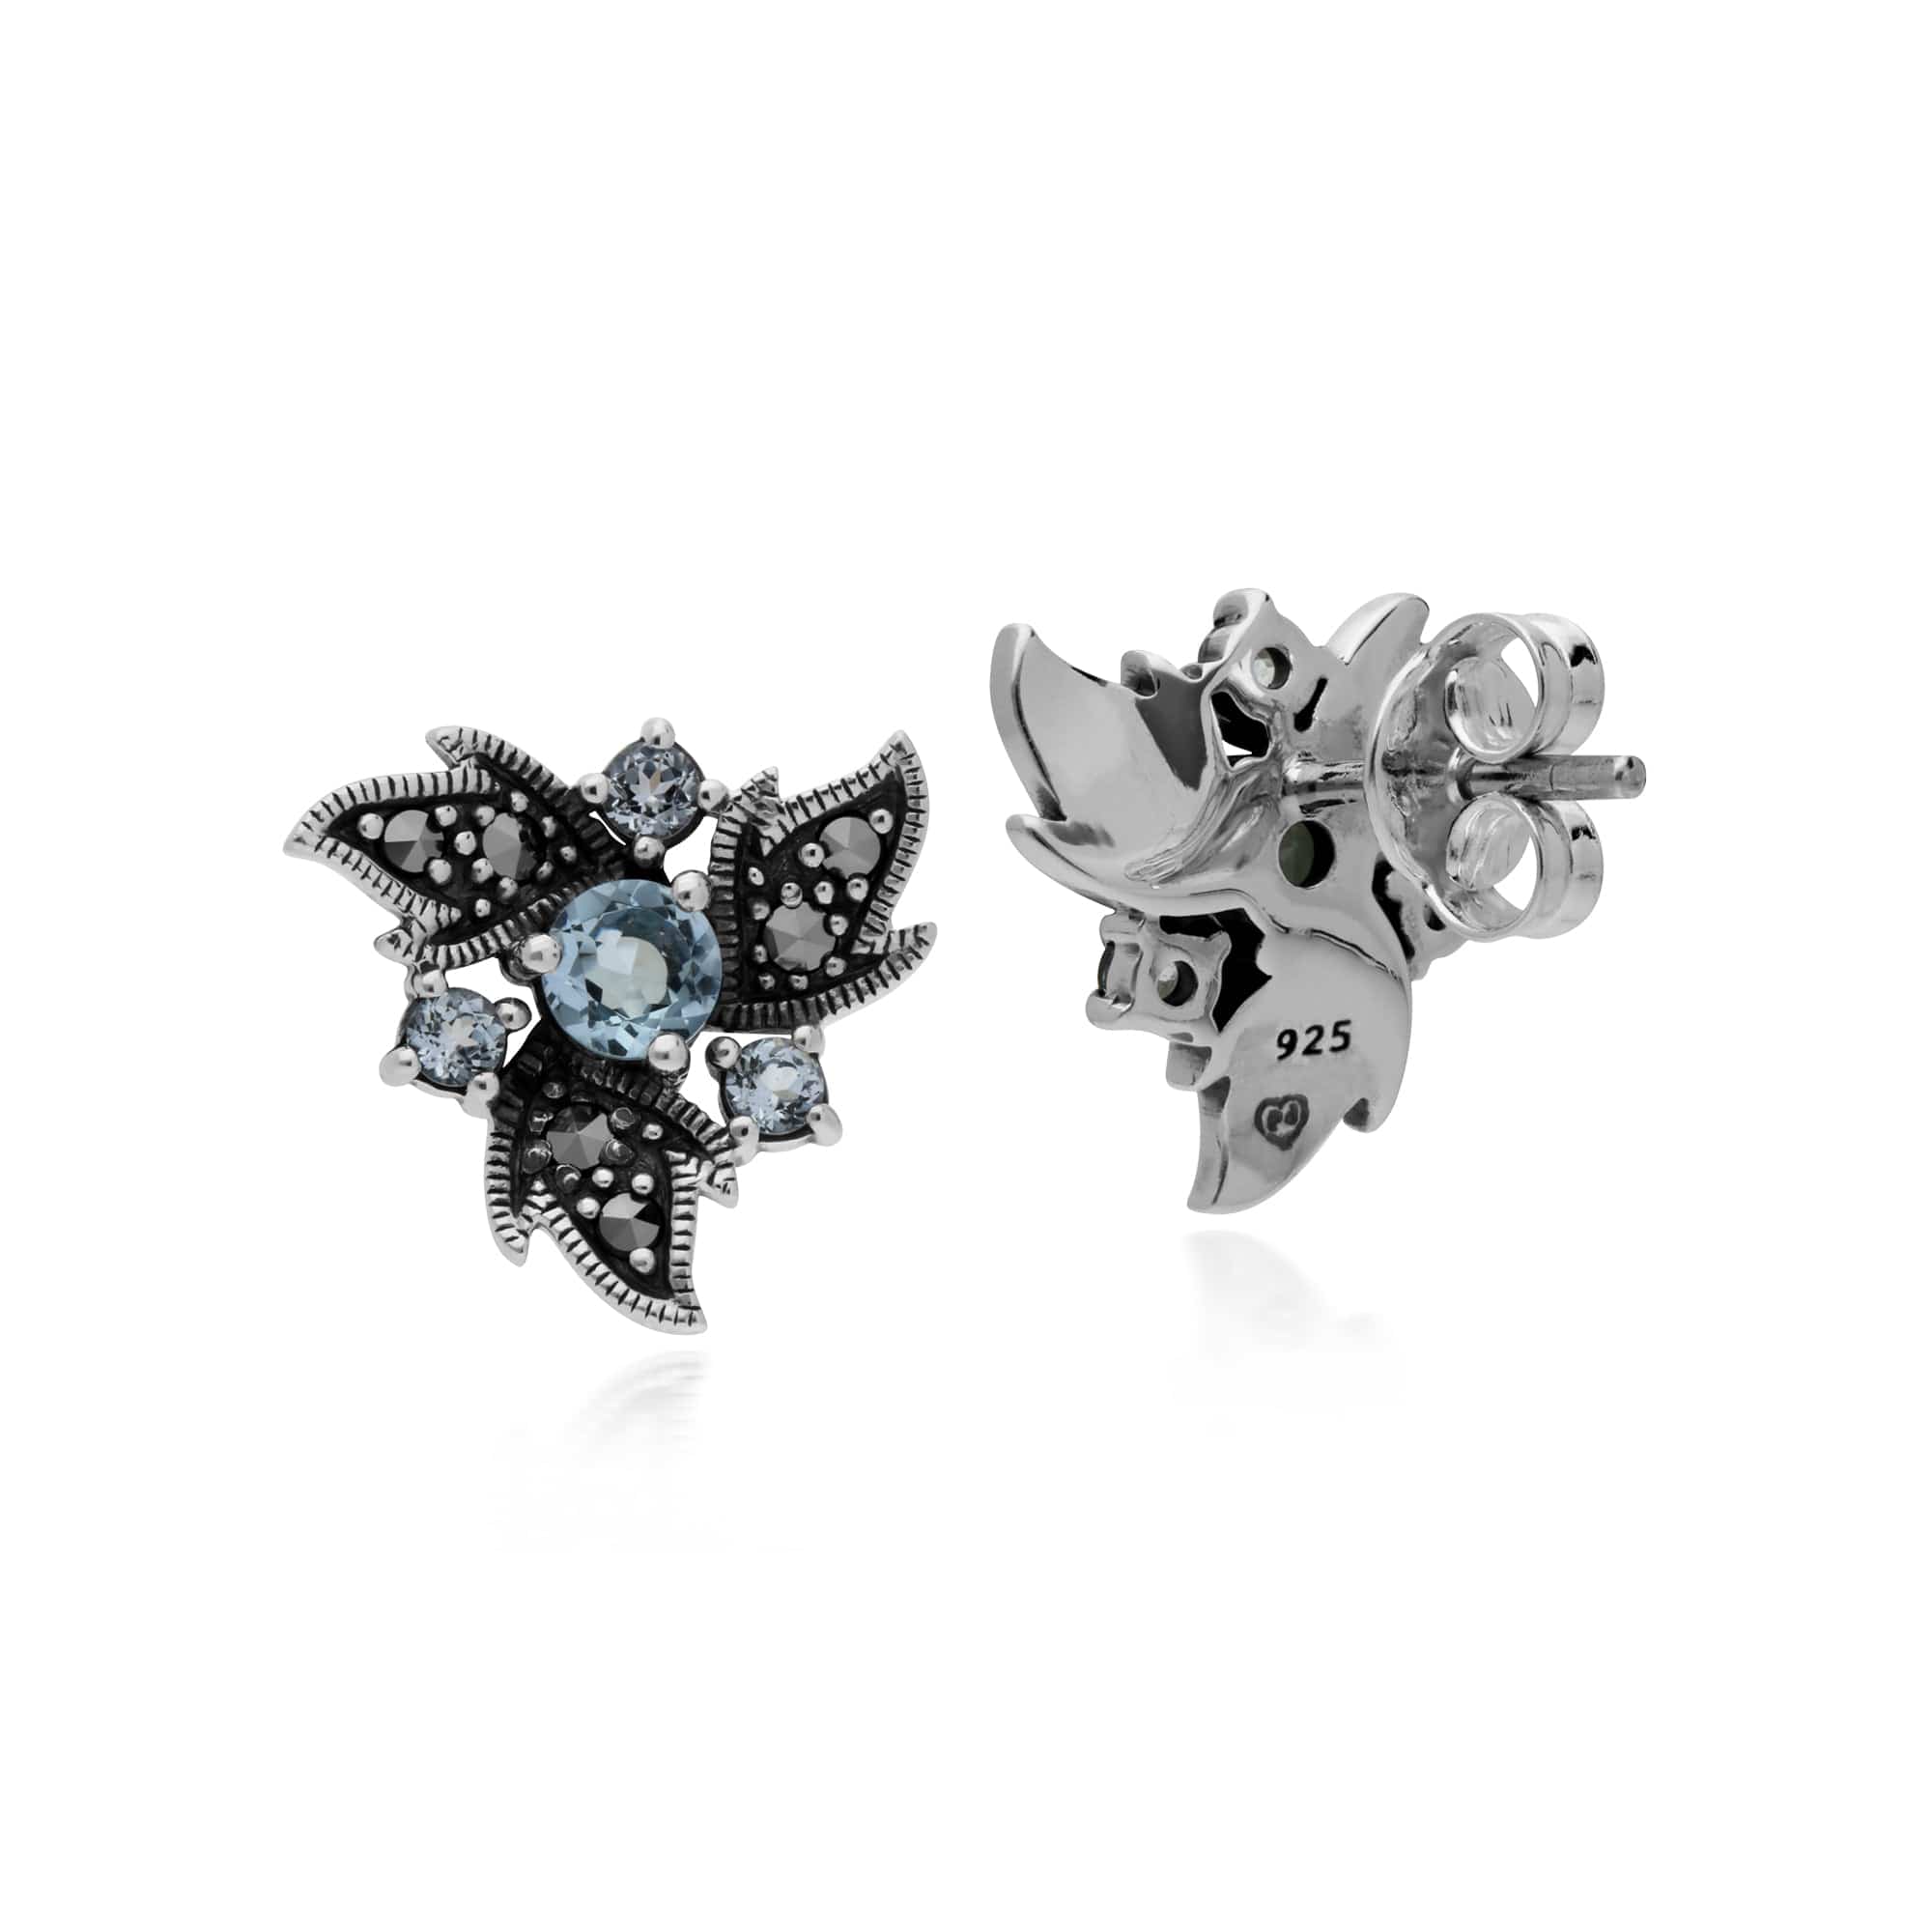 Gemondo Sterling Silver Blue Topaz & Marcasite Art Noveau Floral Earrings - Gemondo